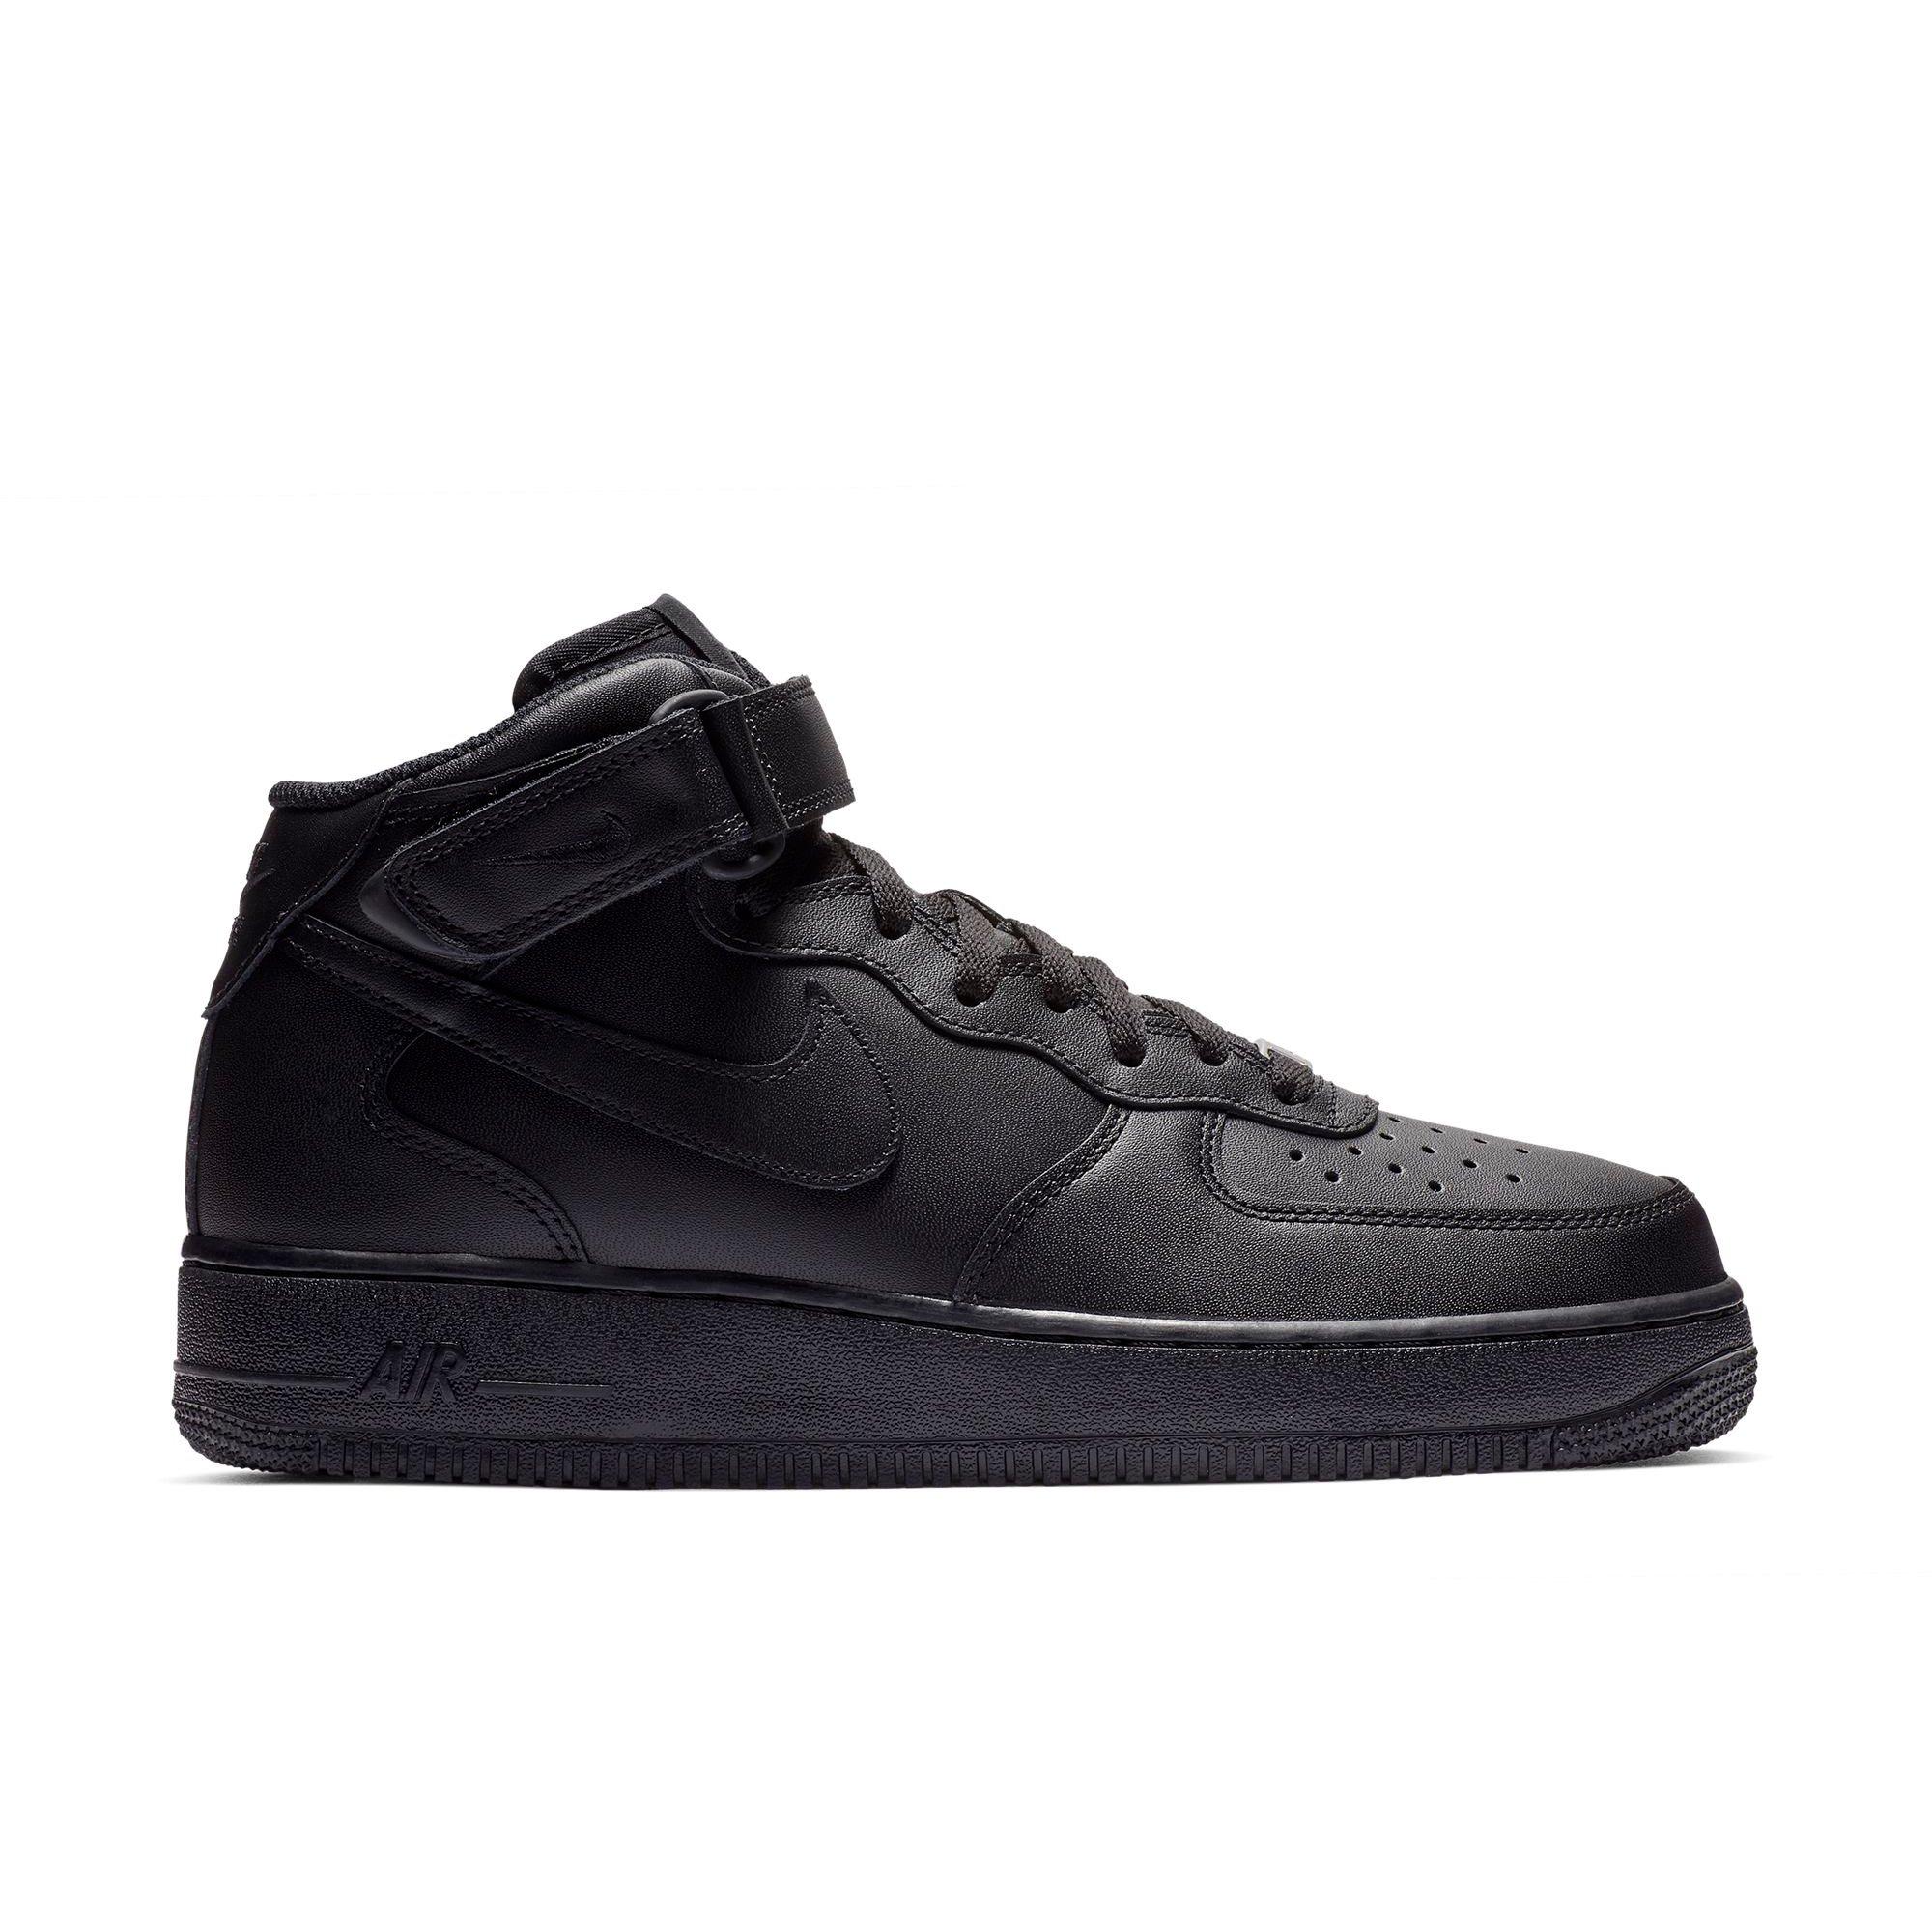 Mens Black Air Force 1 Shoes.